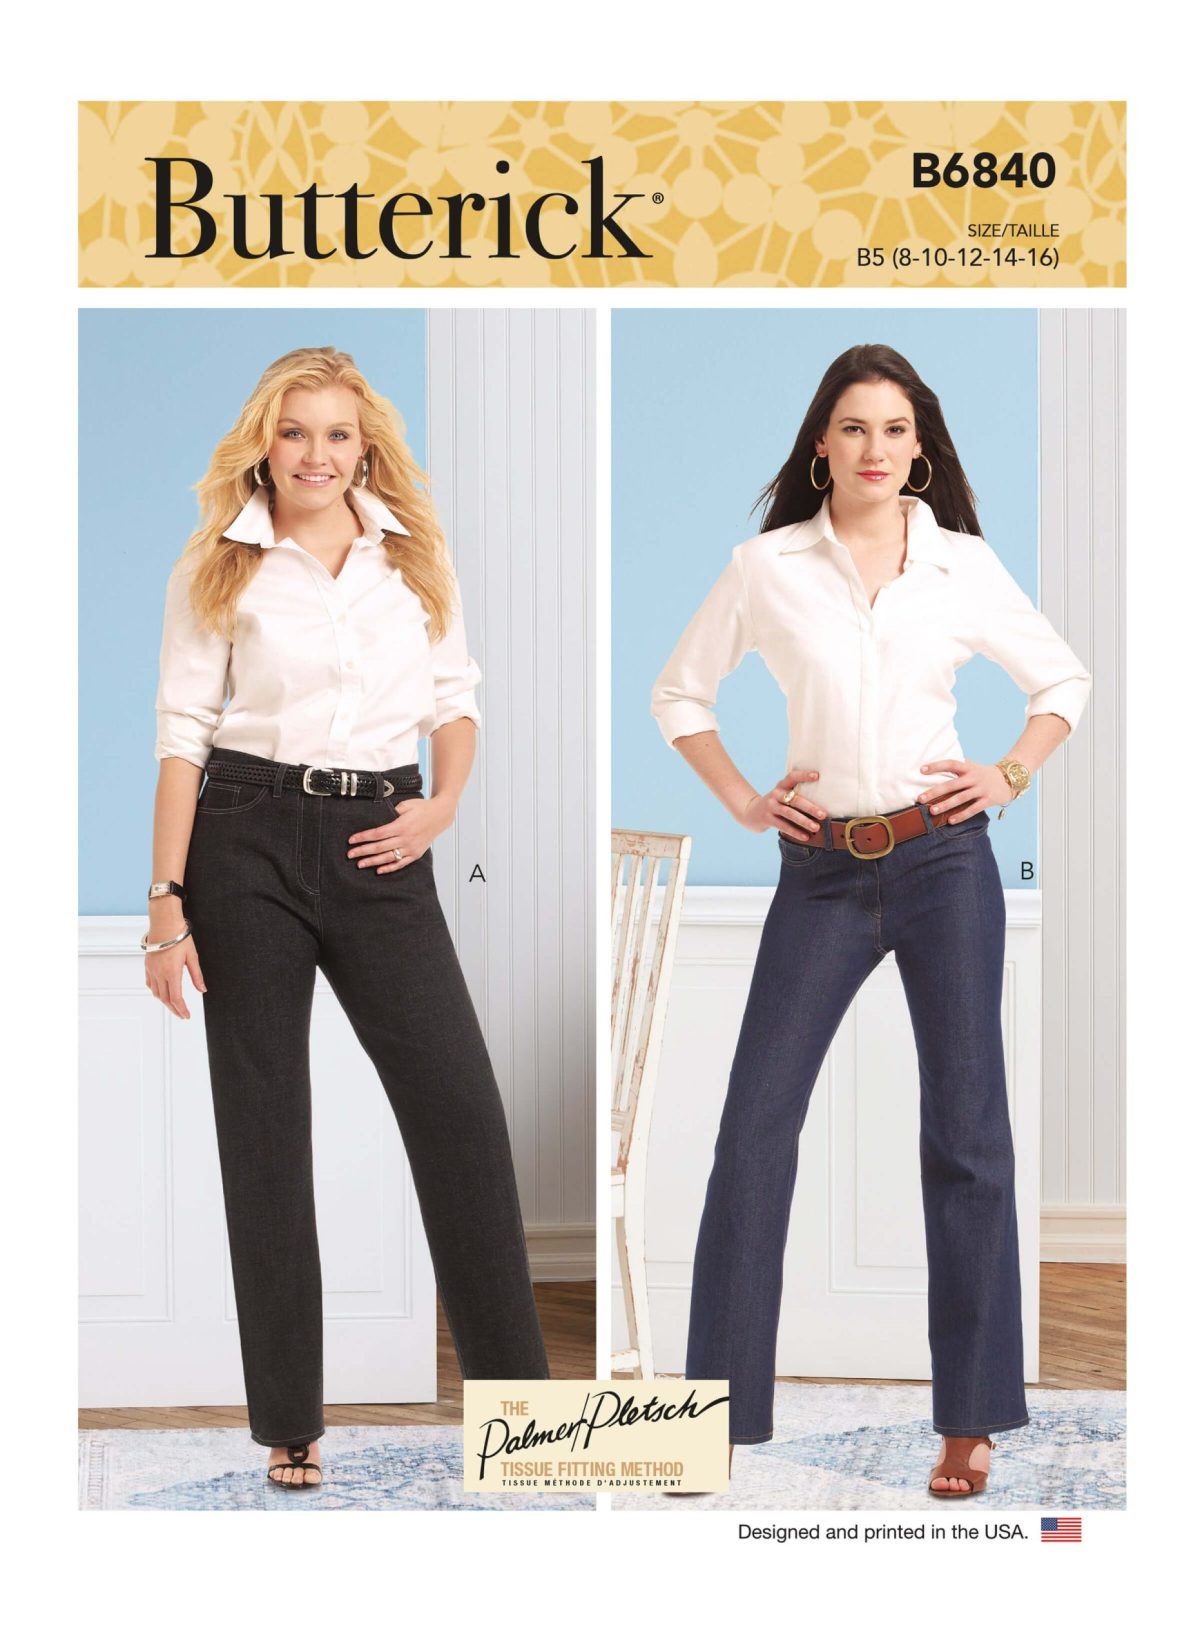 Butterick Sewing Pattern B6840 Misses' & Women's Straight-Leg or Boot Cut Jeans Palmer/Pletsch